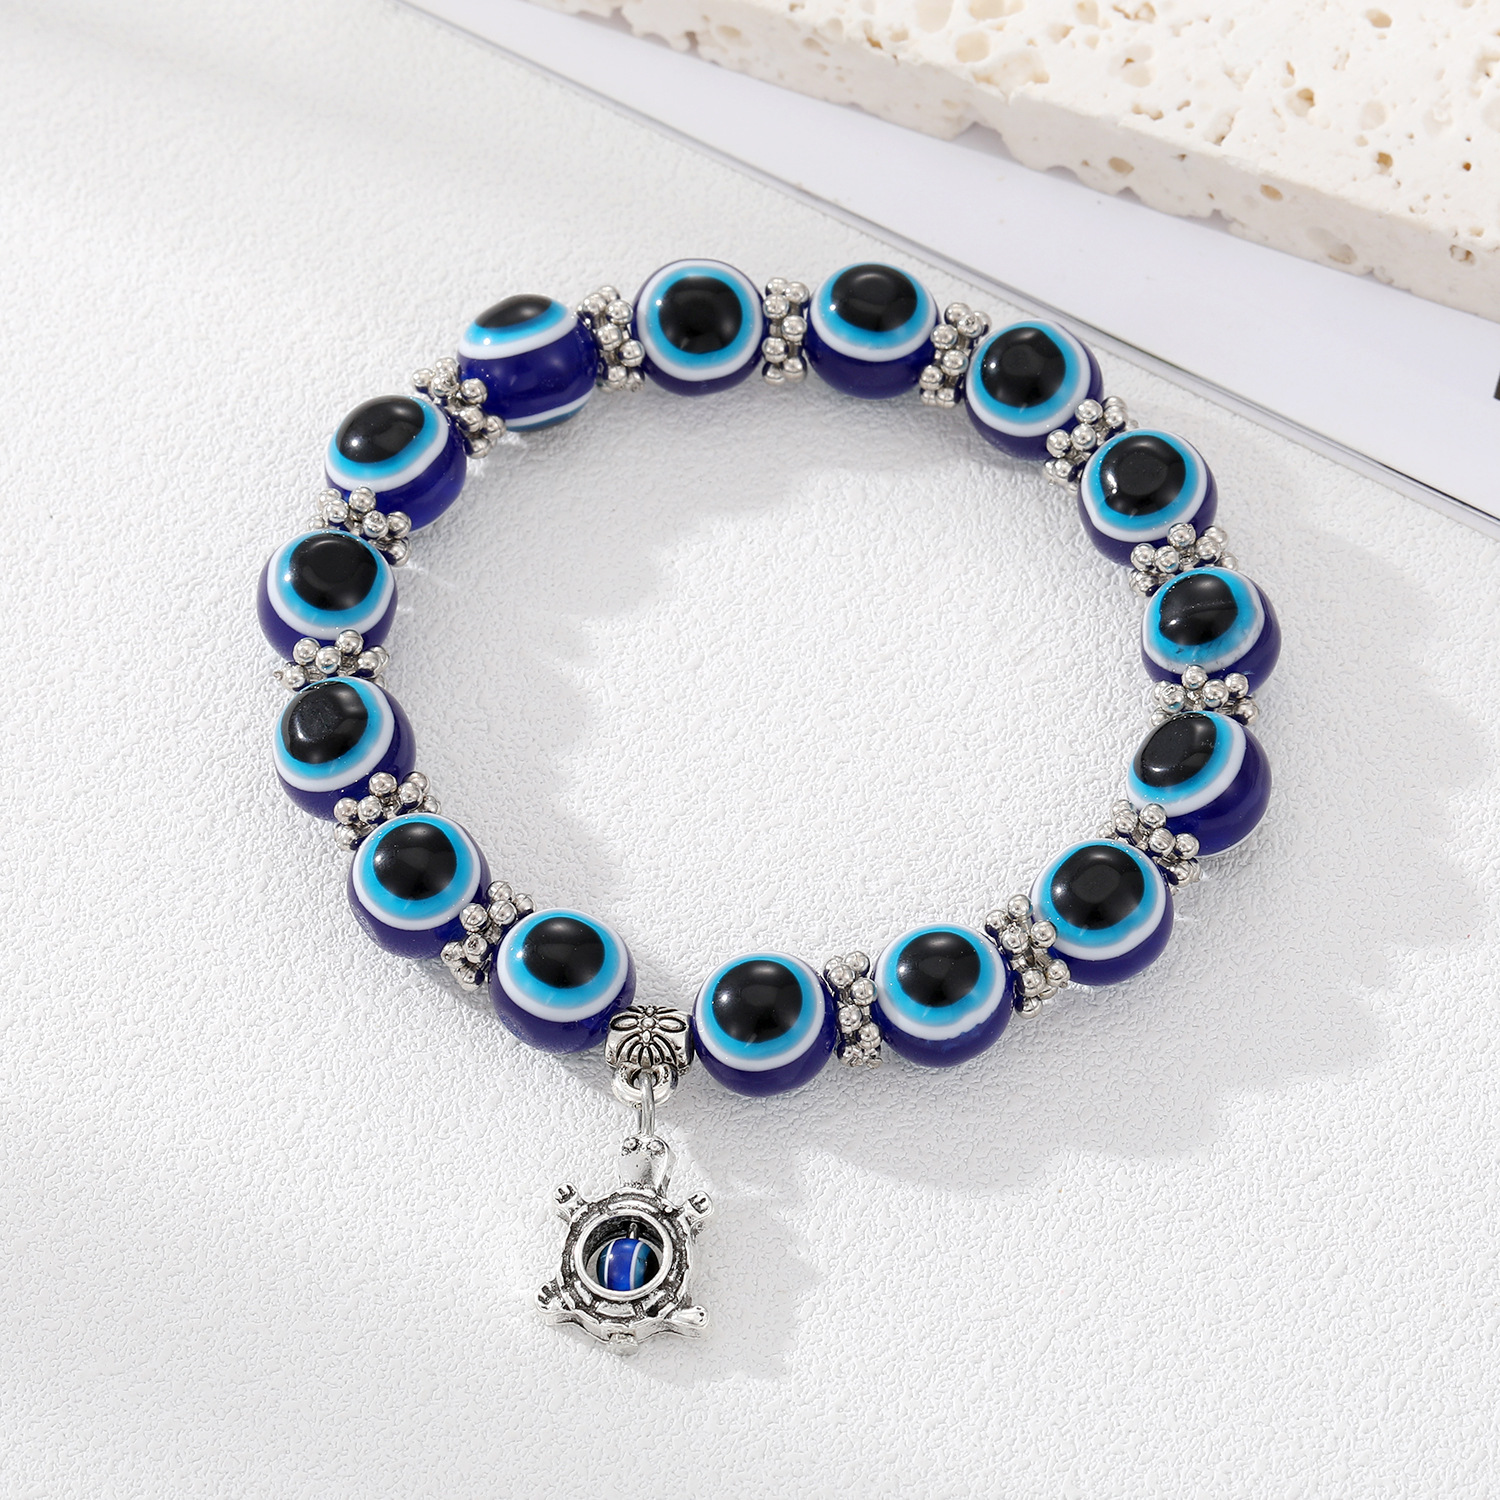 1:Blue turtle bracelet with large beads